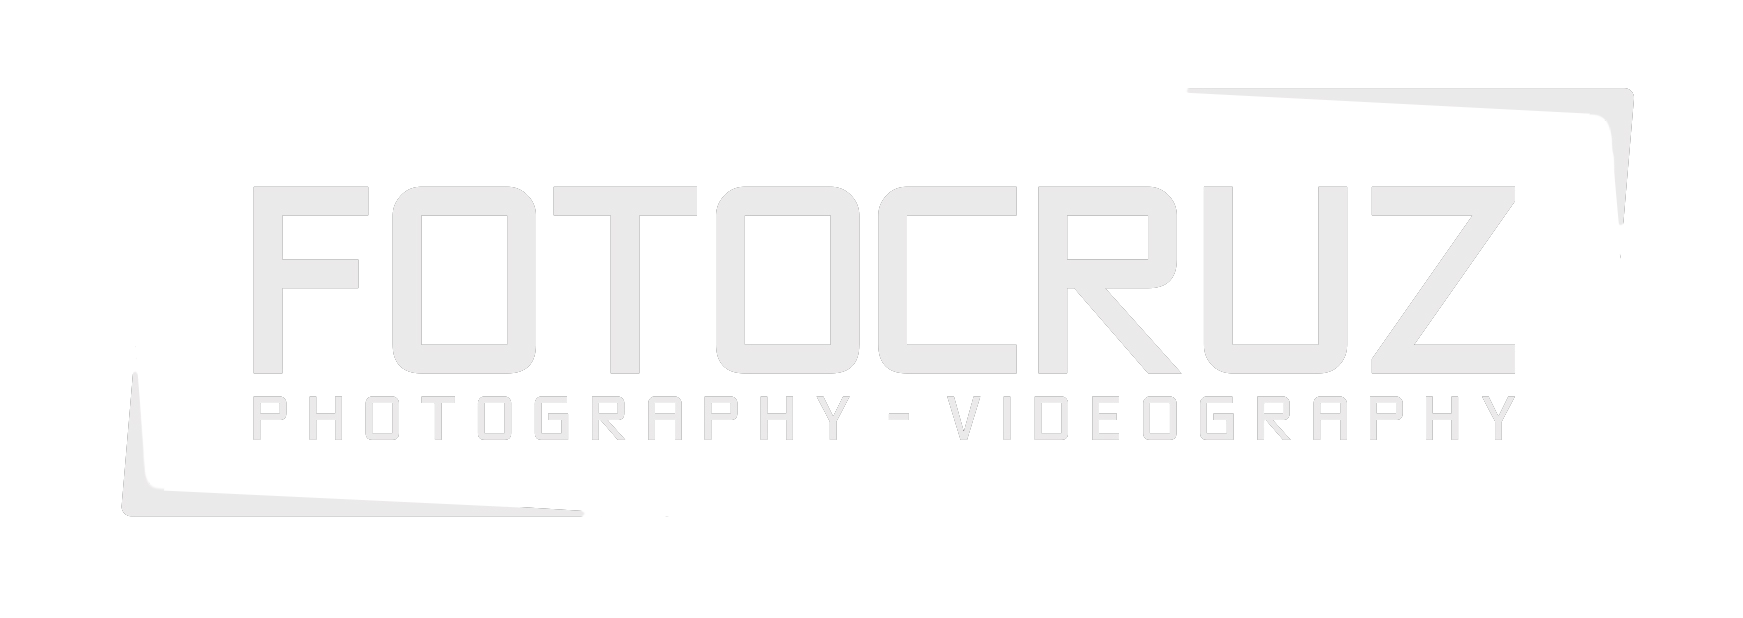 fotocruz fotograf logo